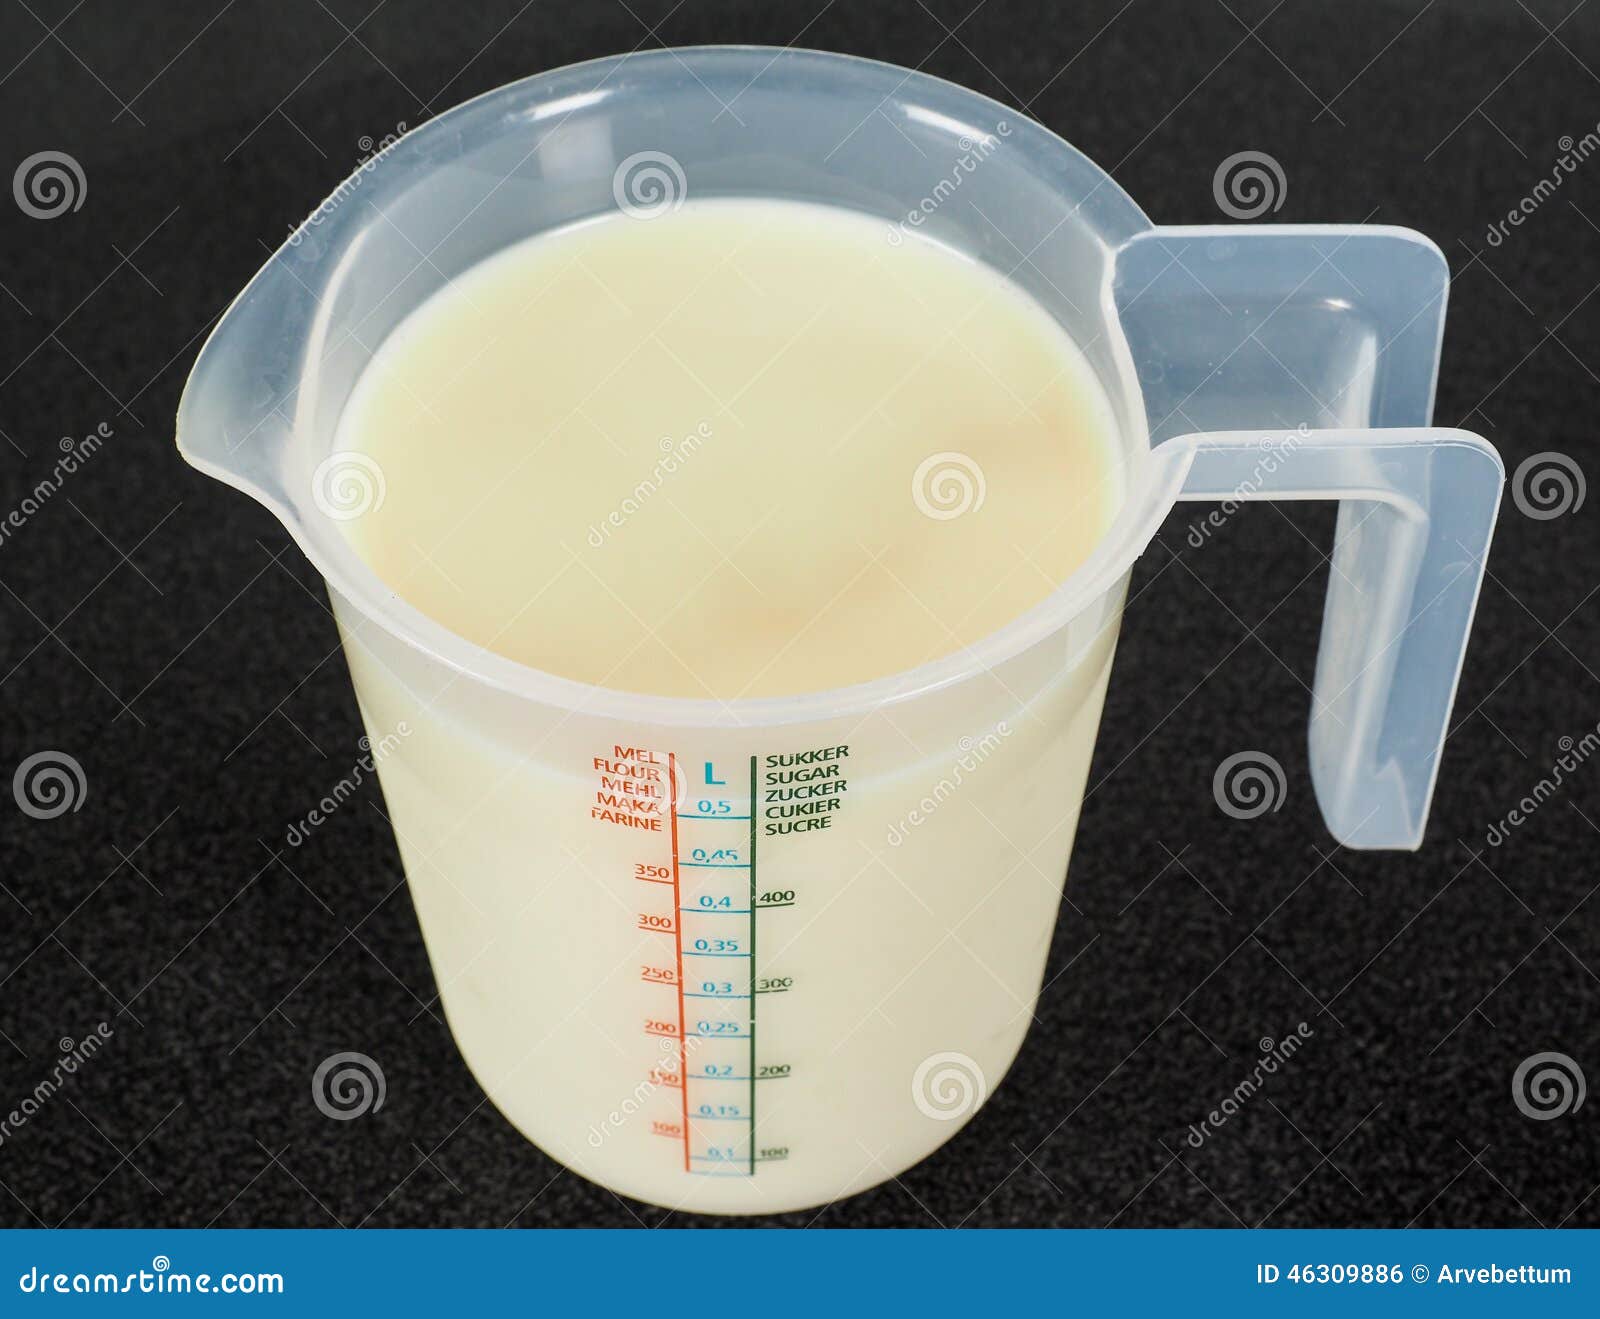 half a liter of white milk in a transparent jug